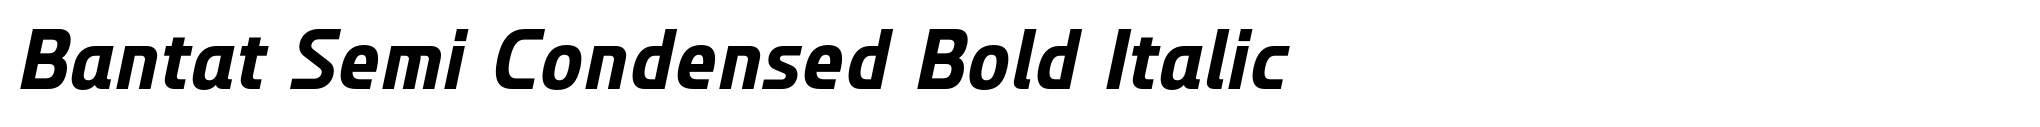 Bantat Semi Condensed Bold Italic image